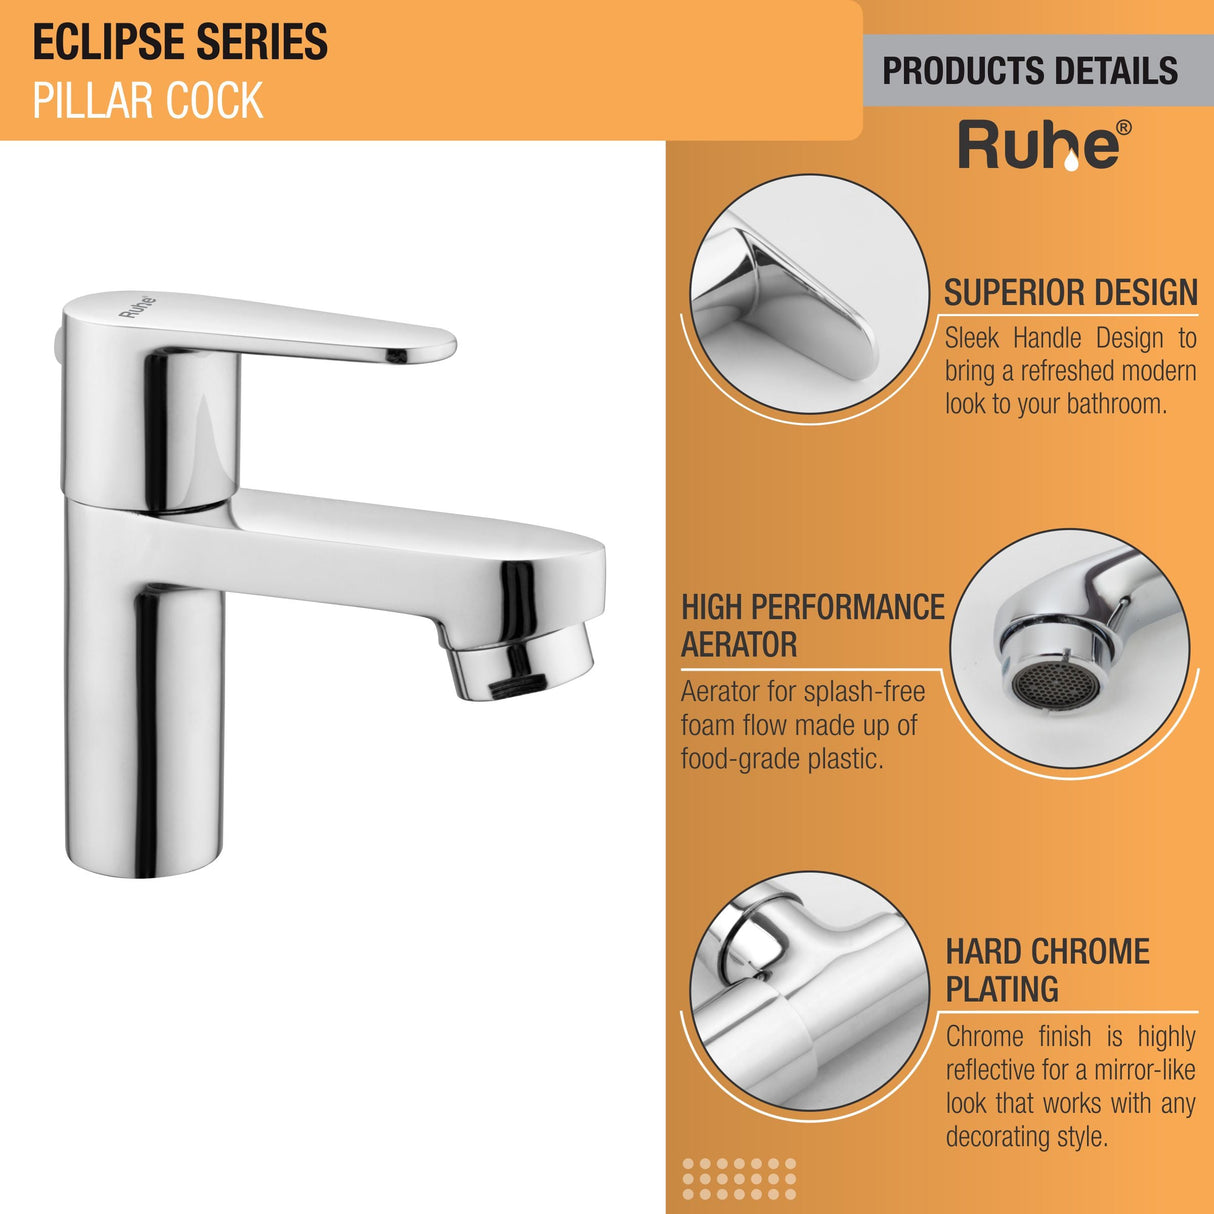 Eclipse Pillar Tap Brass Faucet product details